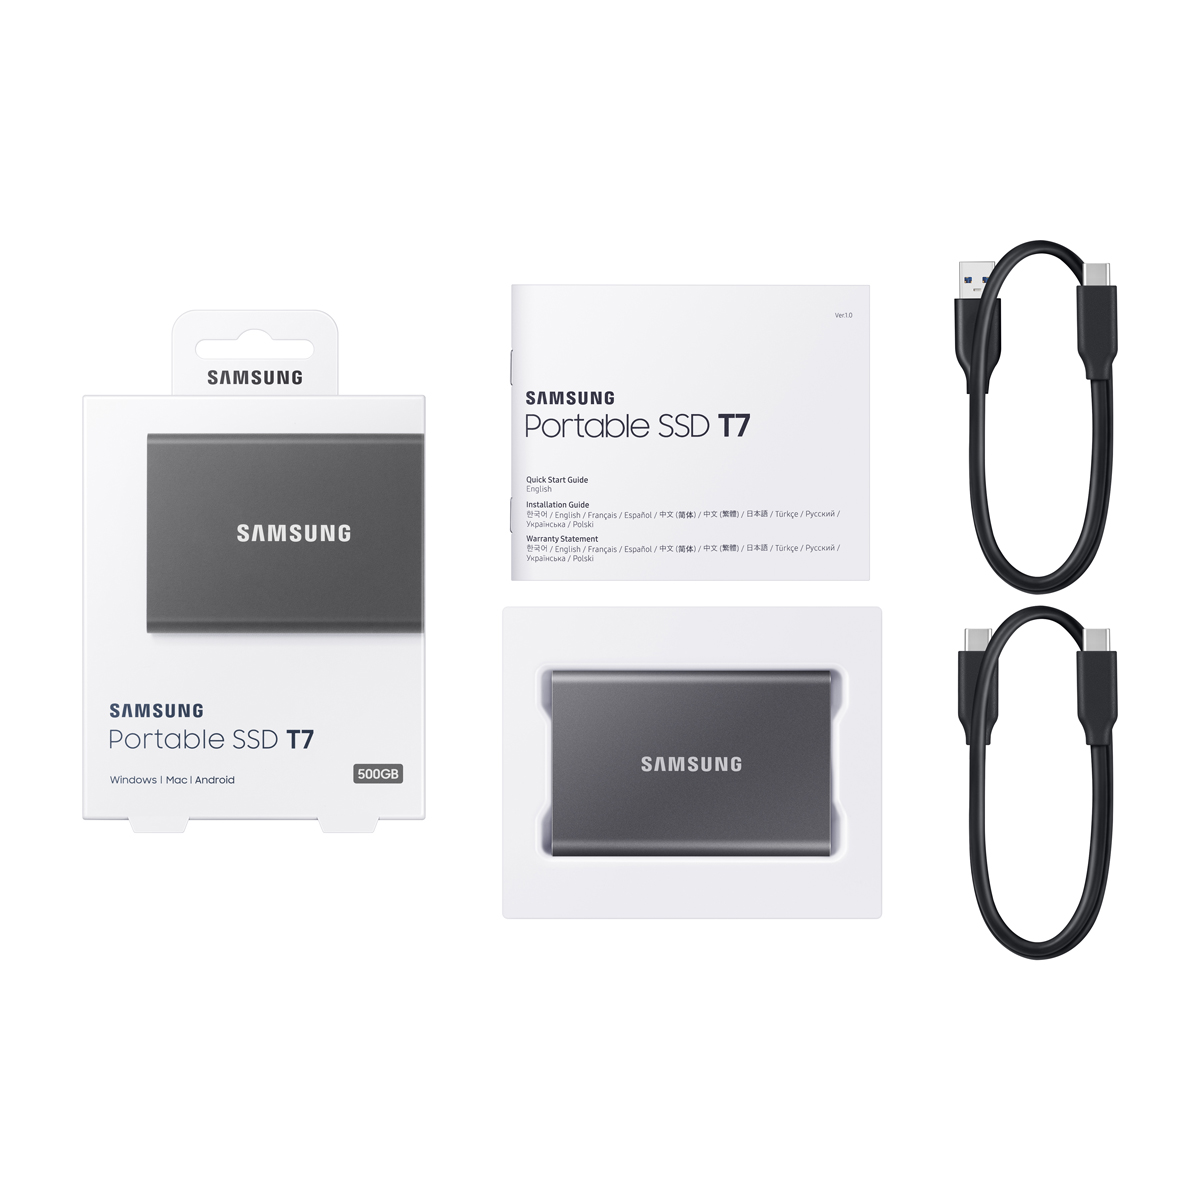 samsung portable SSD T7  1TB 外付けssd